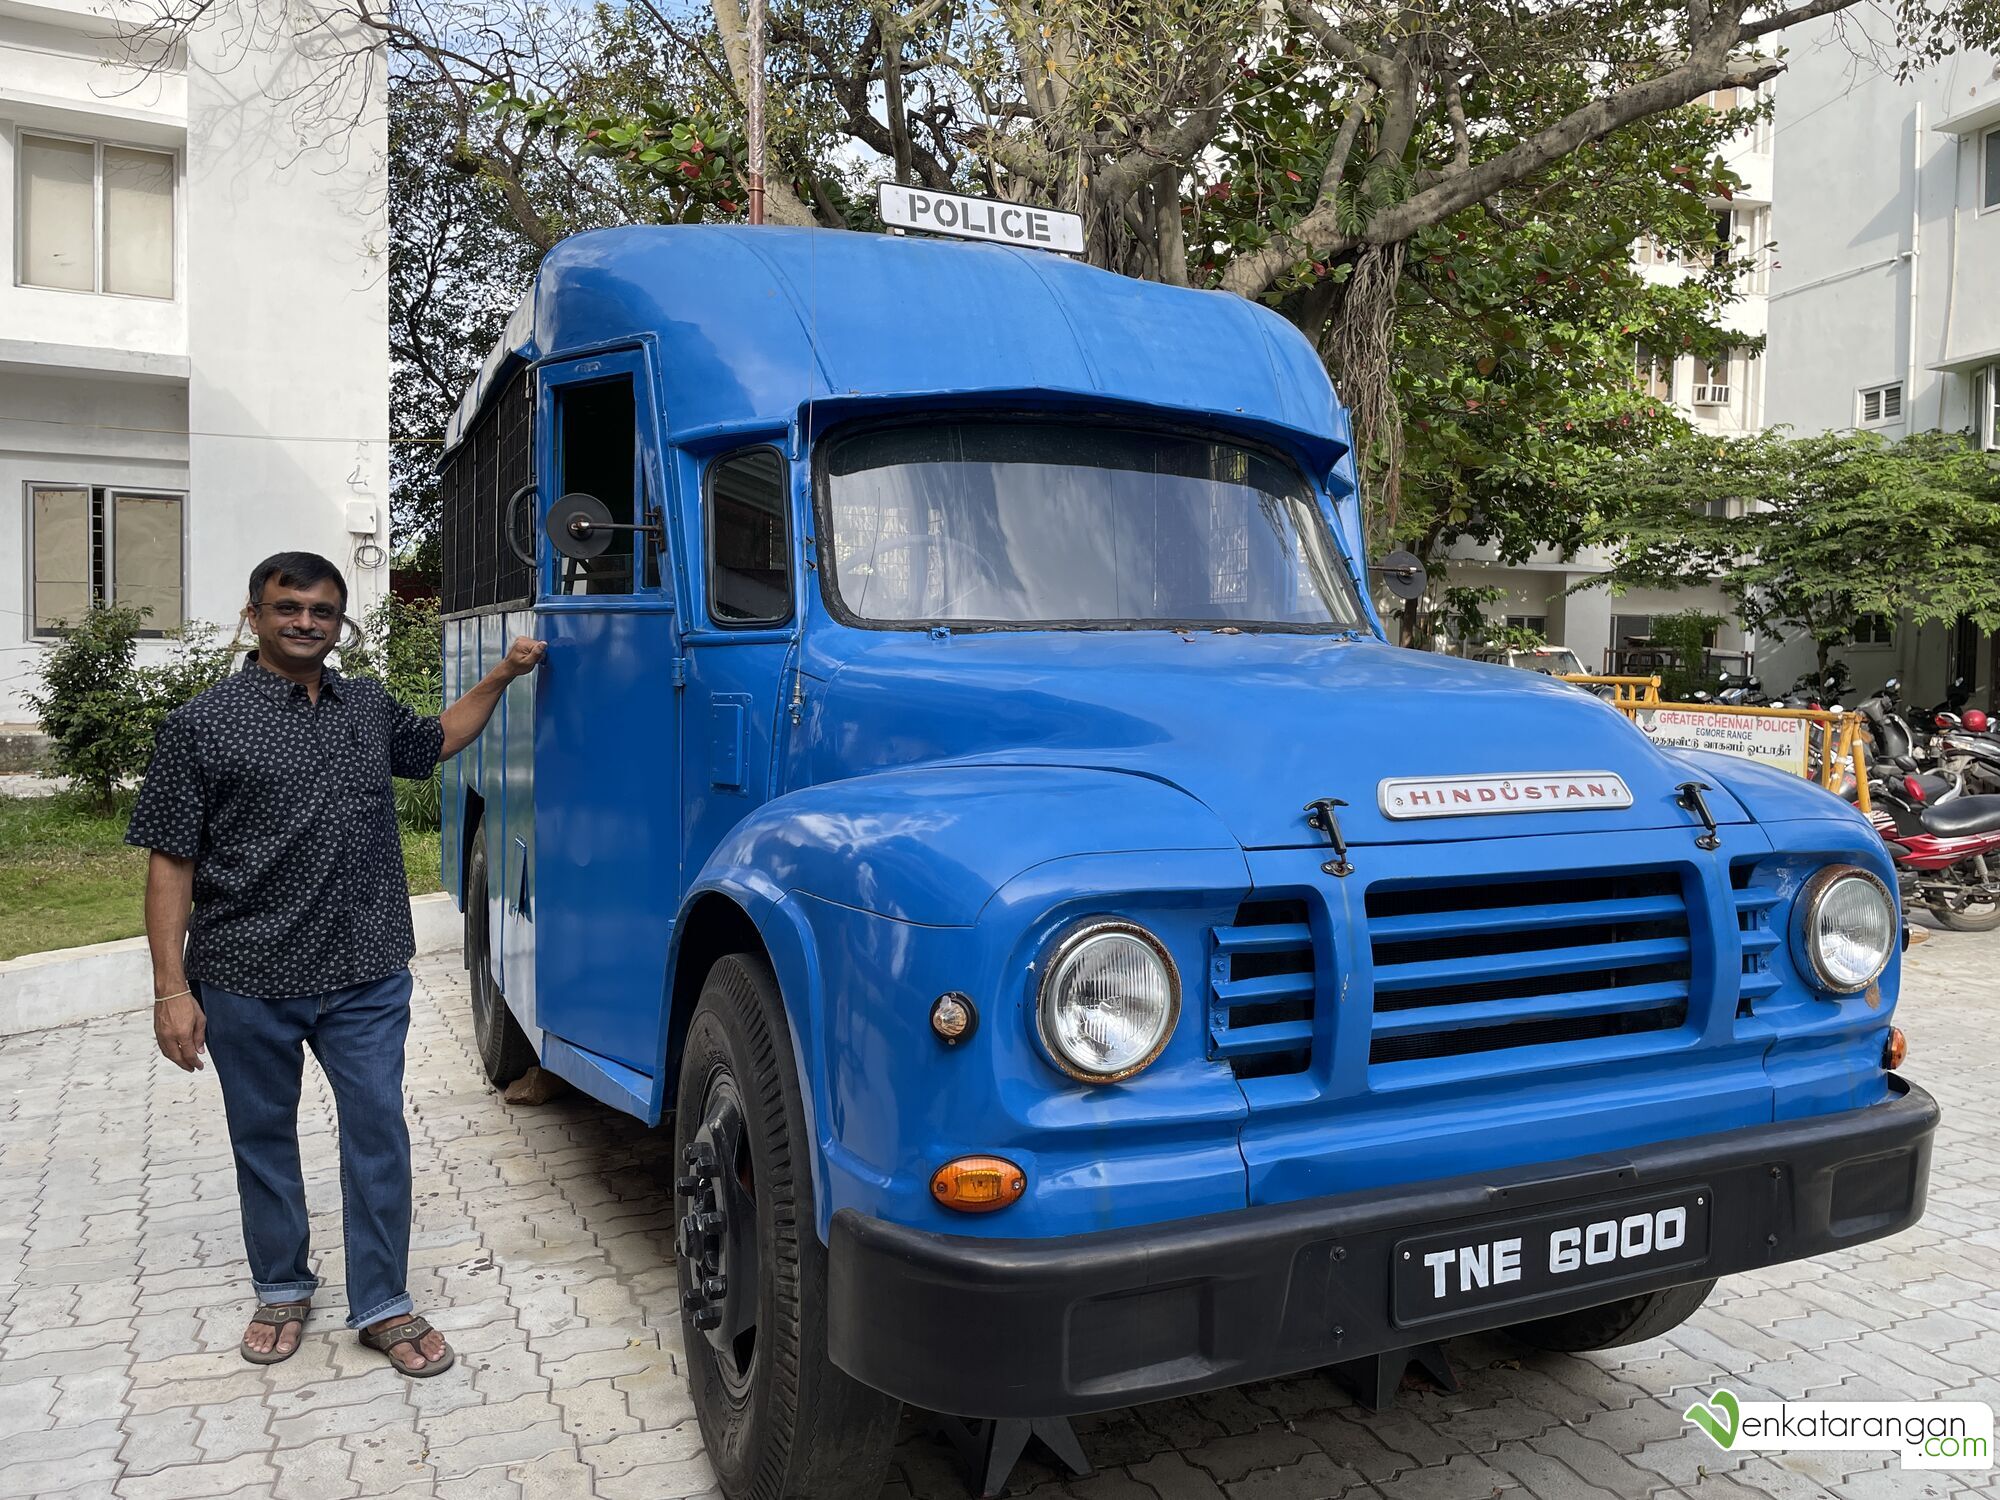 Venkatarangan standing next to a Hindustan Van - similar one appears in most Tamil movies